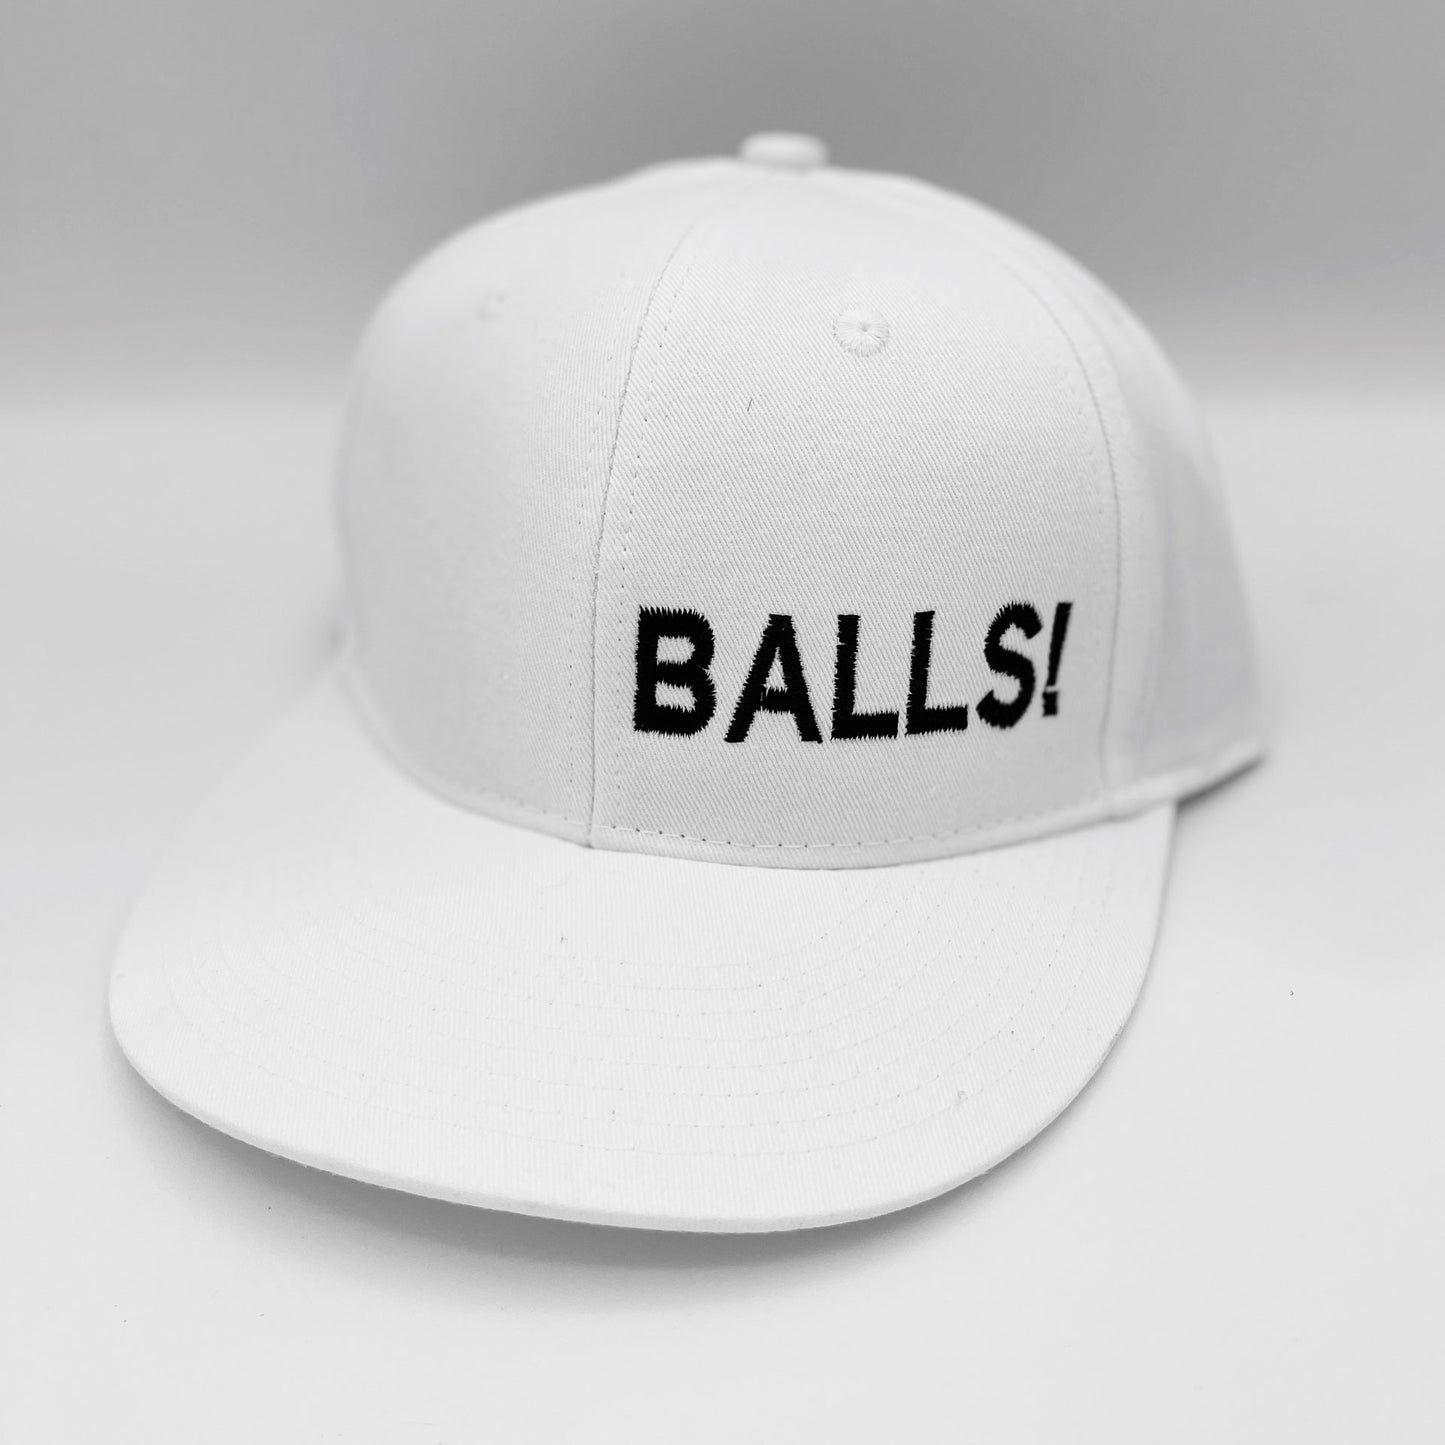 Balls hat